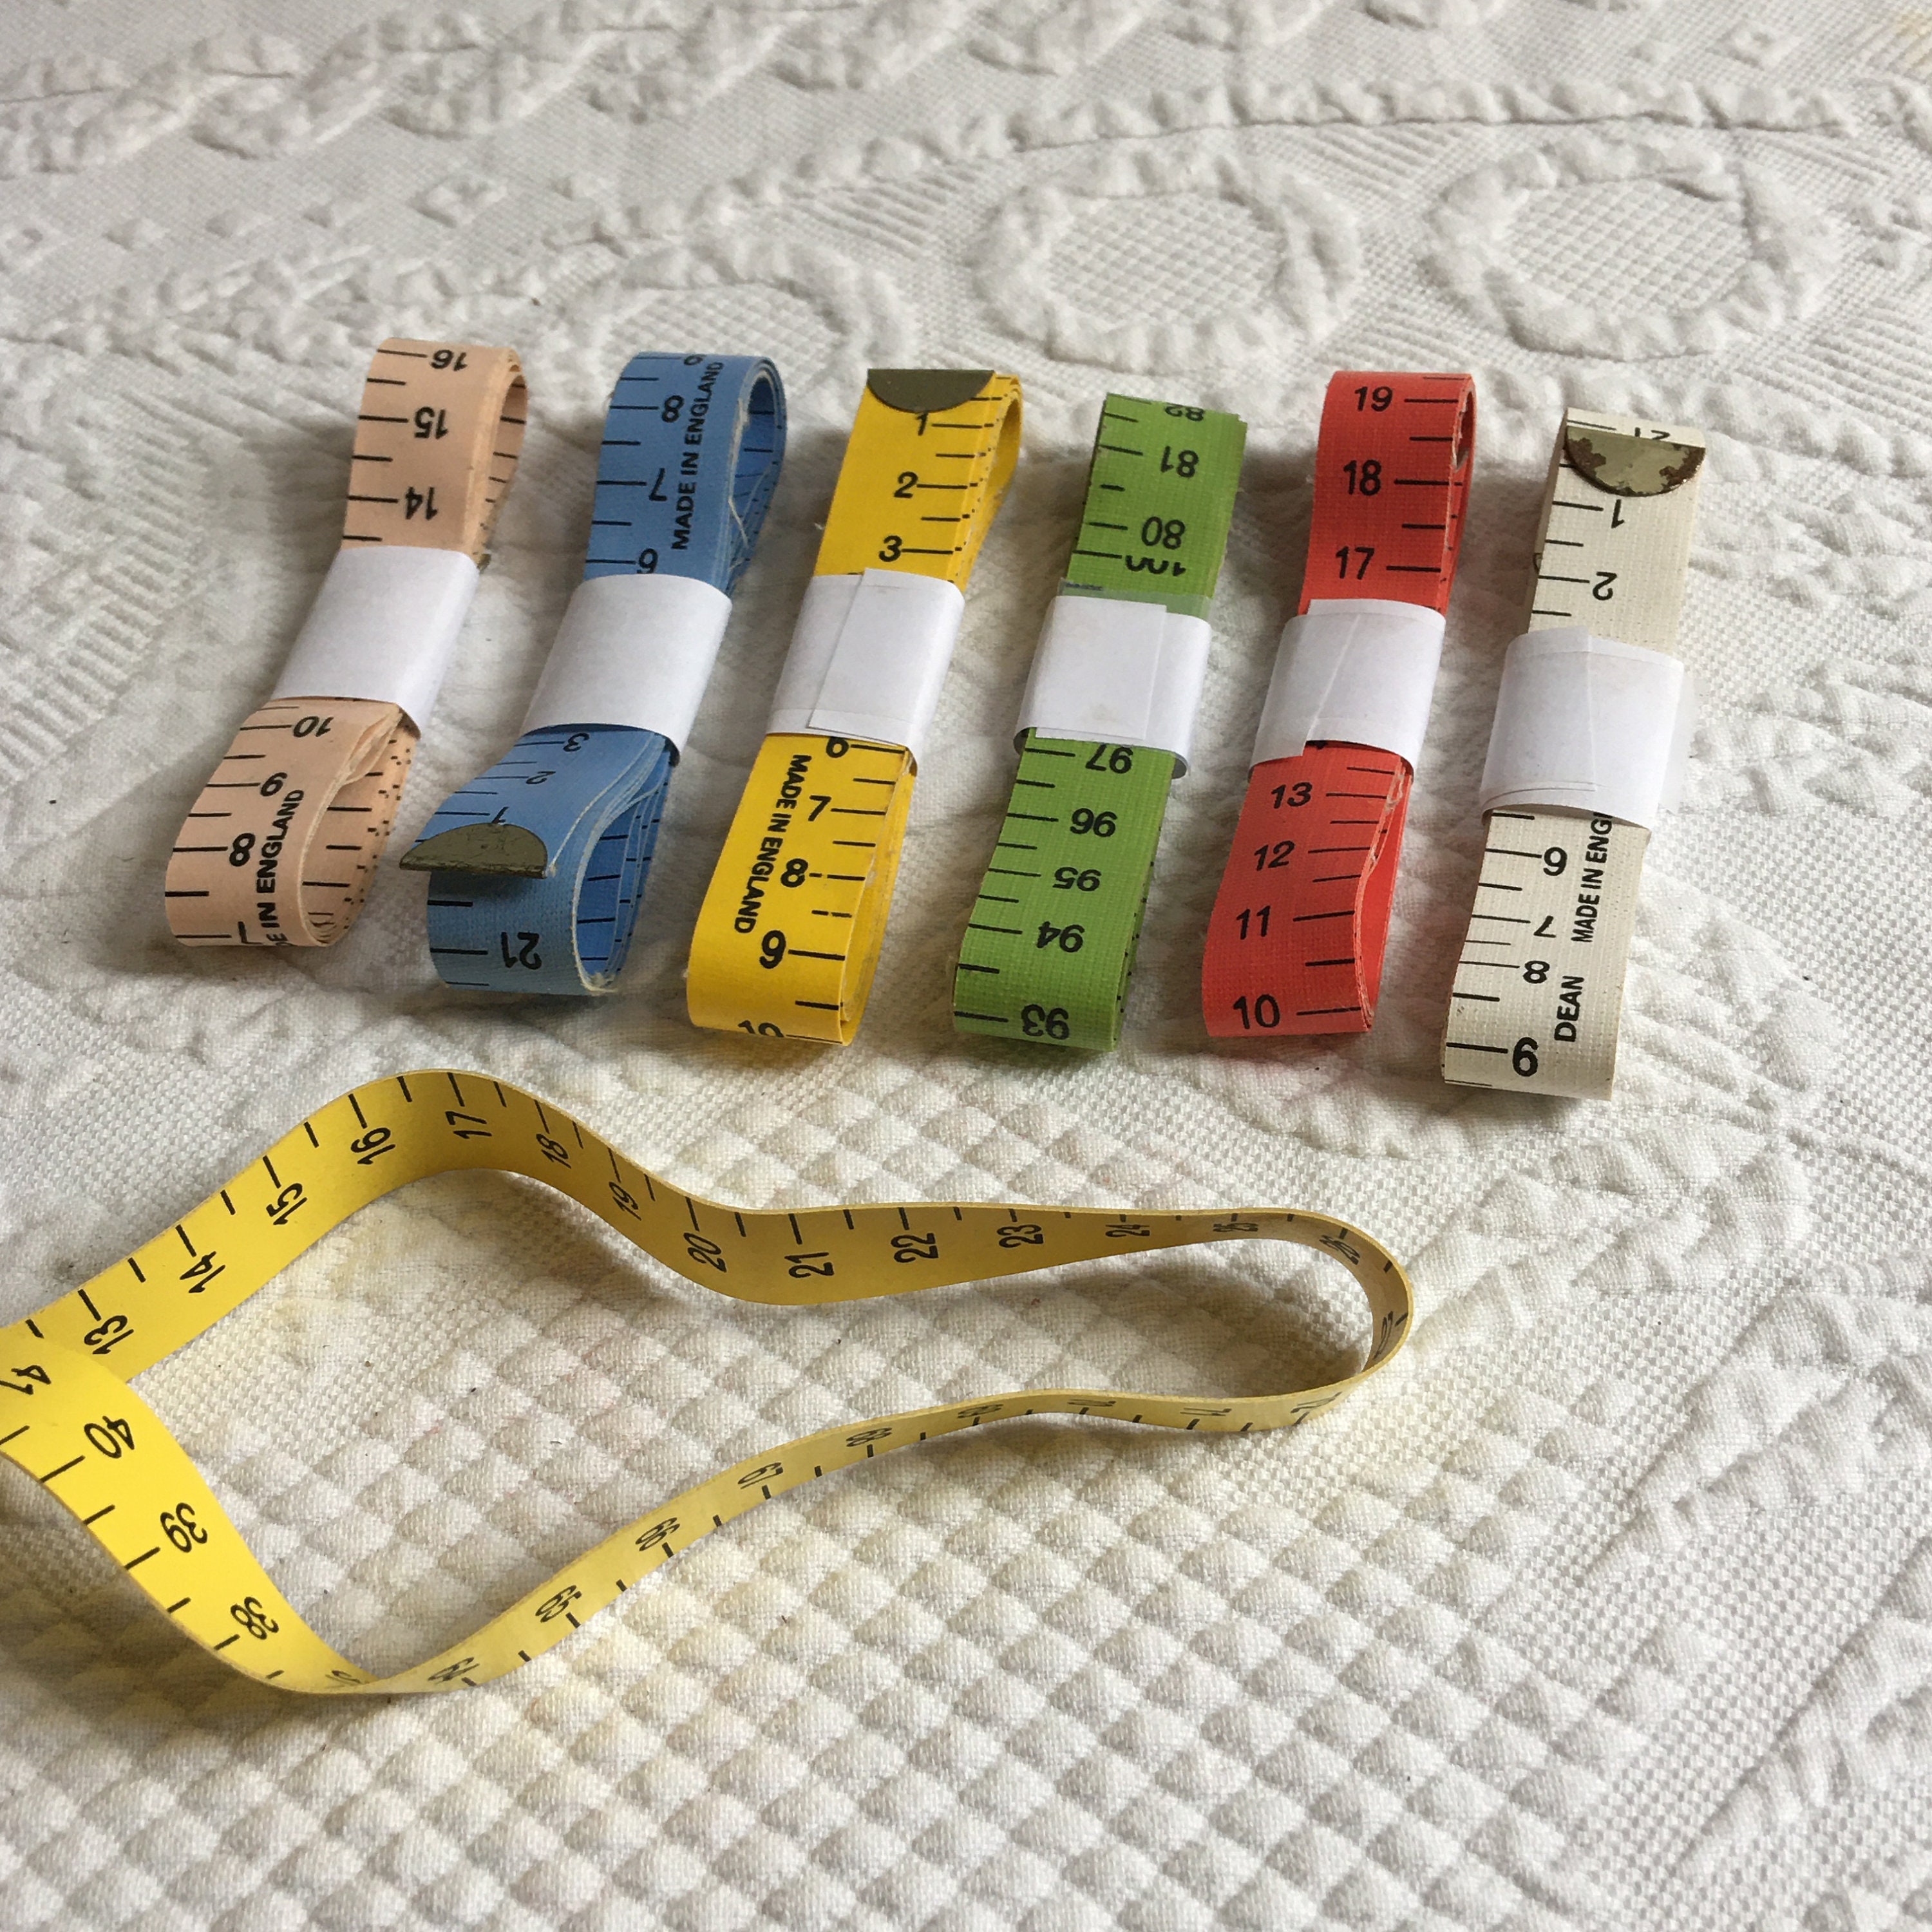 Fiberglass Tape Measure - 60 - Metric/Inches - WAWAK Sewing Supplies